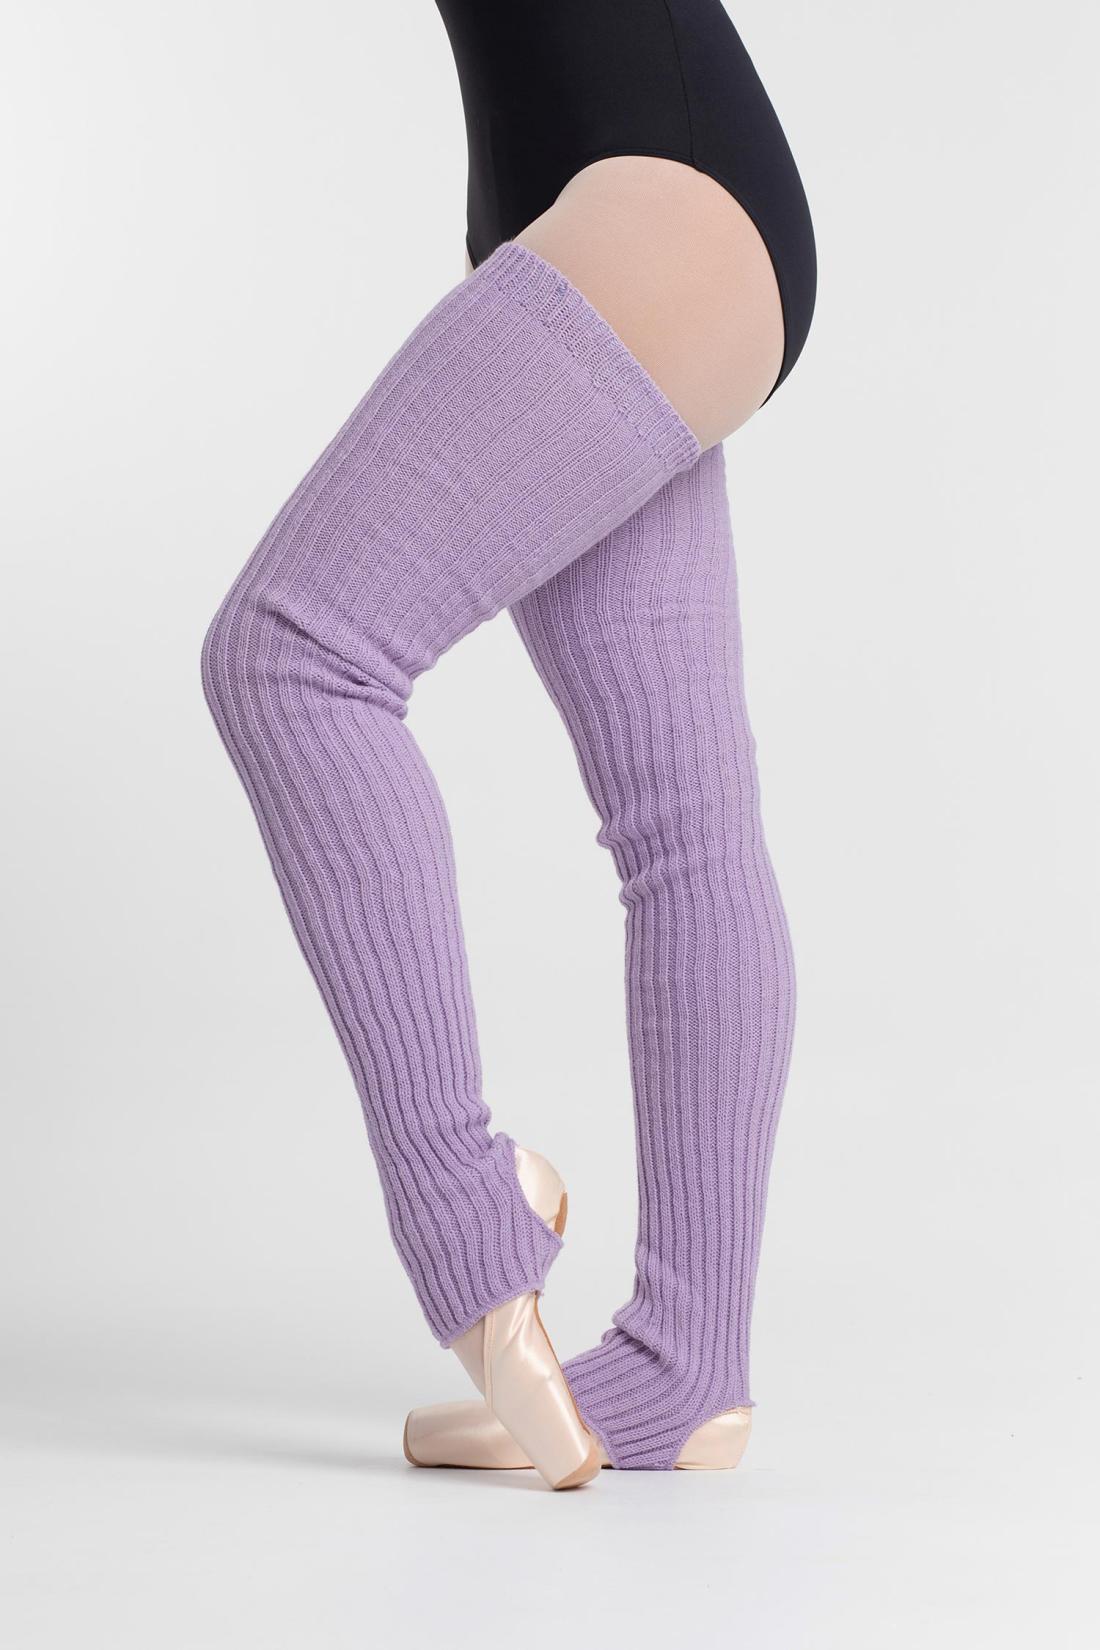 Intermezzo classic Maxical knit stirrup Legwarmers ballet dancewear